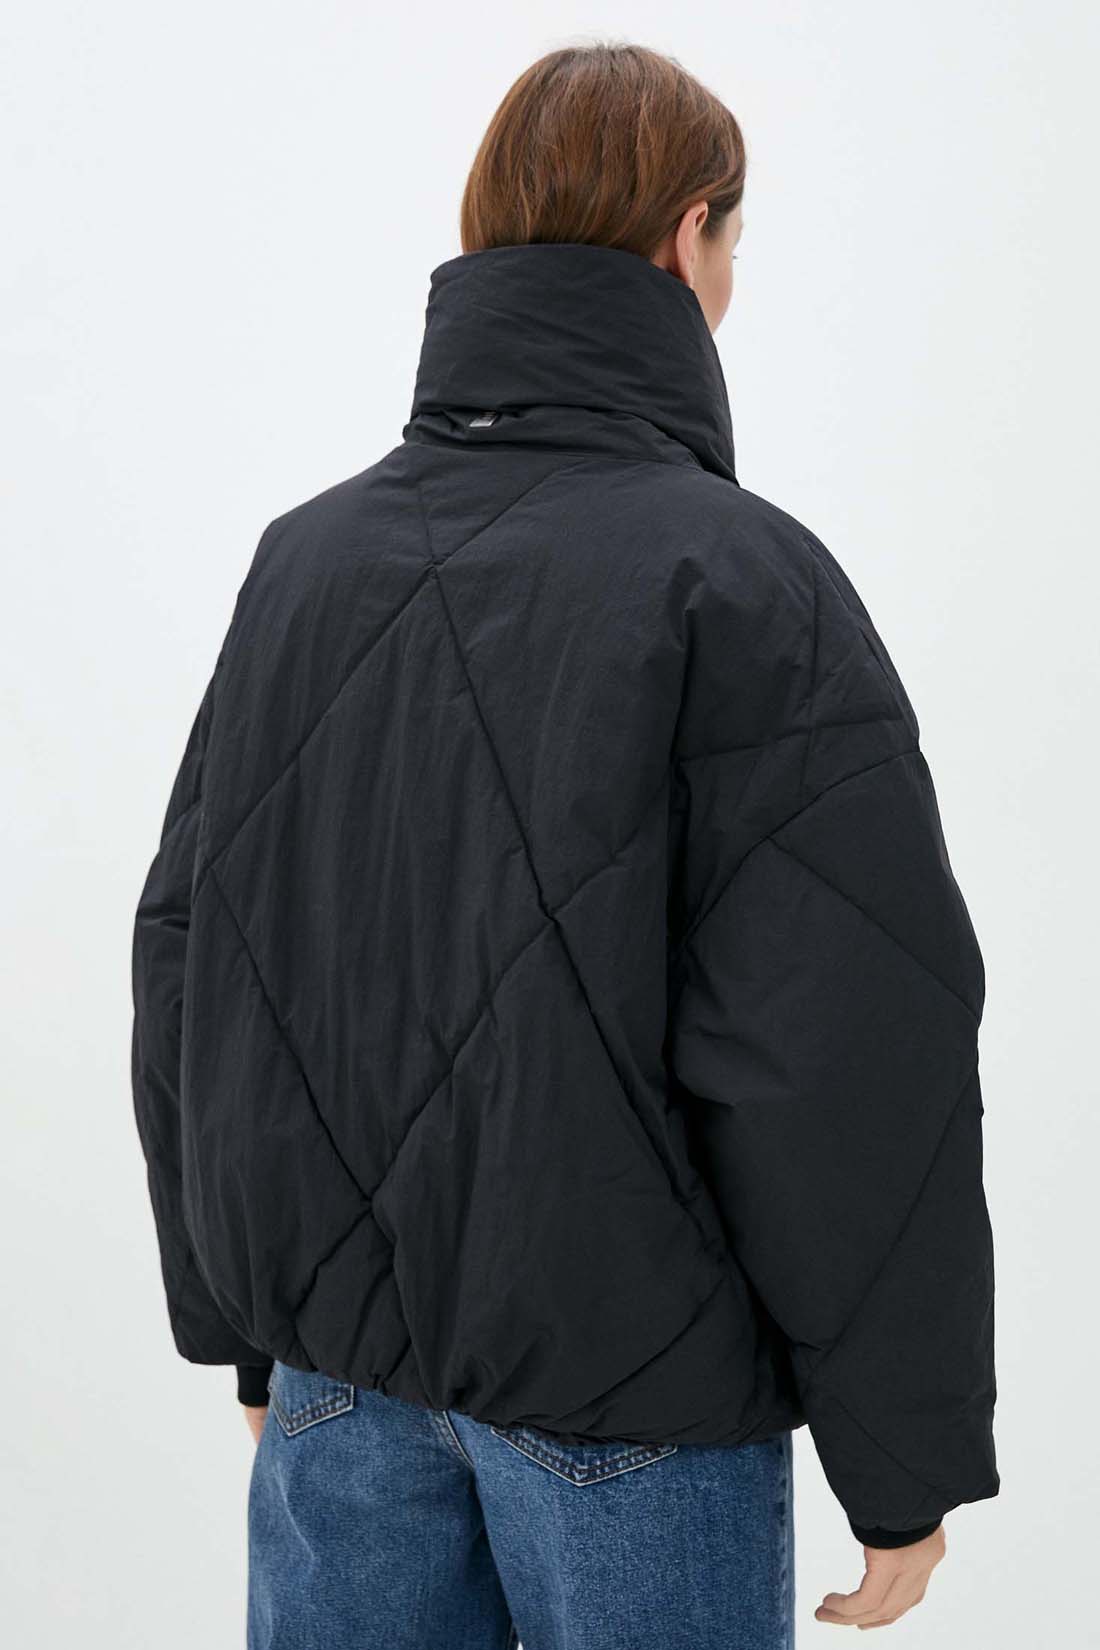 Куртка (Эко пух) (арт. baon B041518), размер S, цвет черный Куртка (Эко пух) (арт. baon B041518) - фото 2